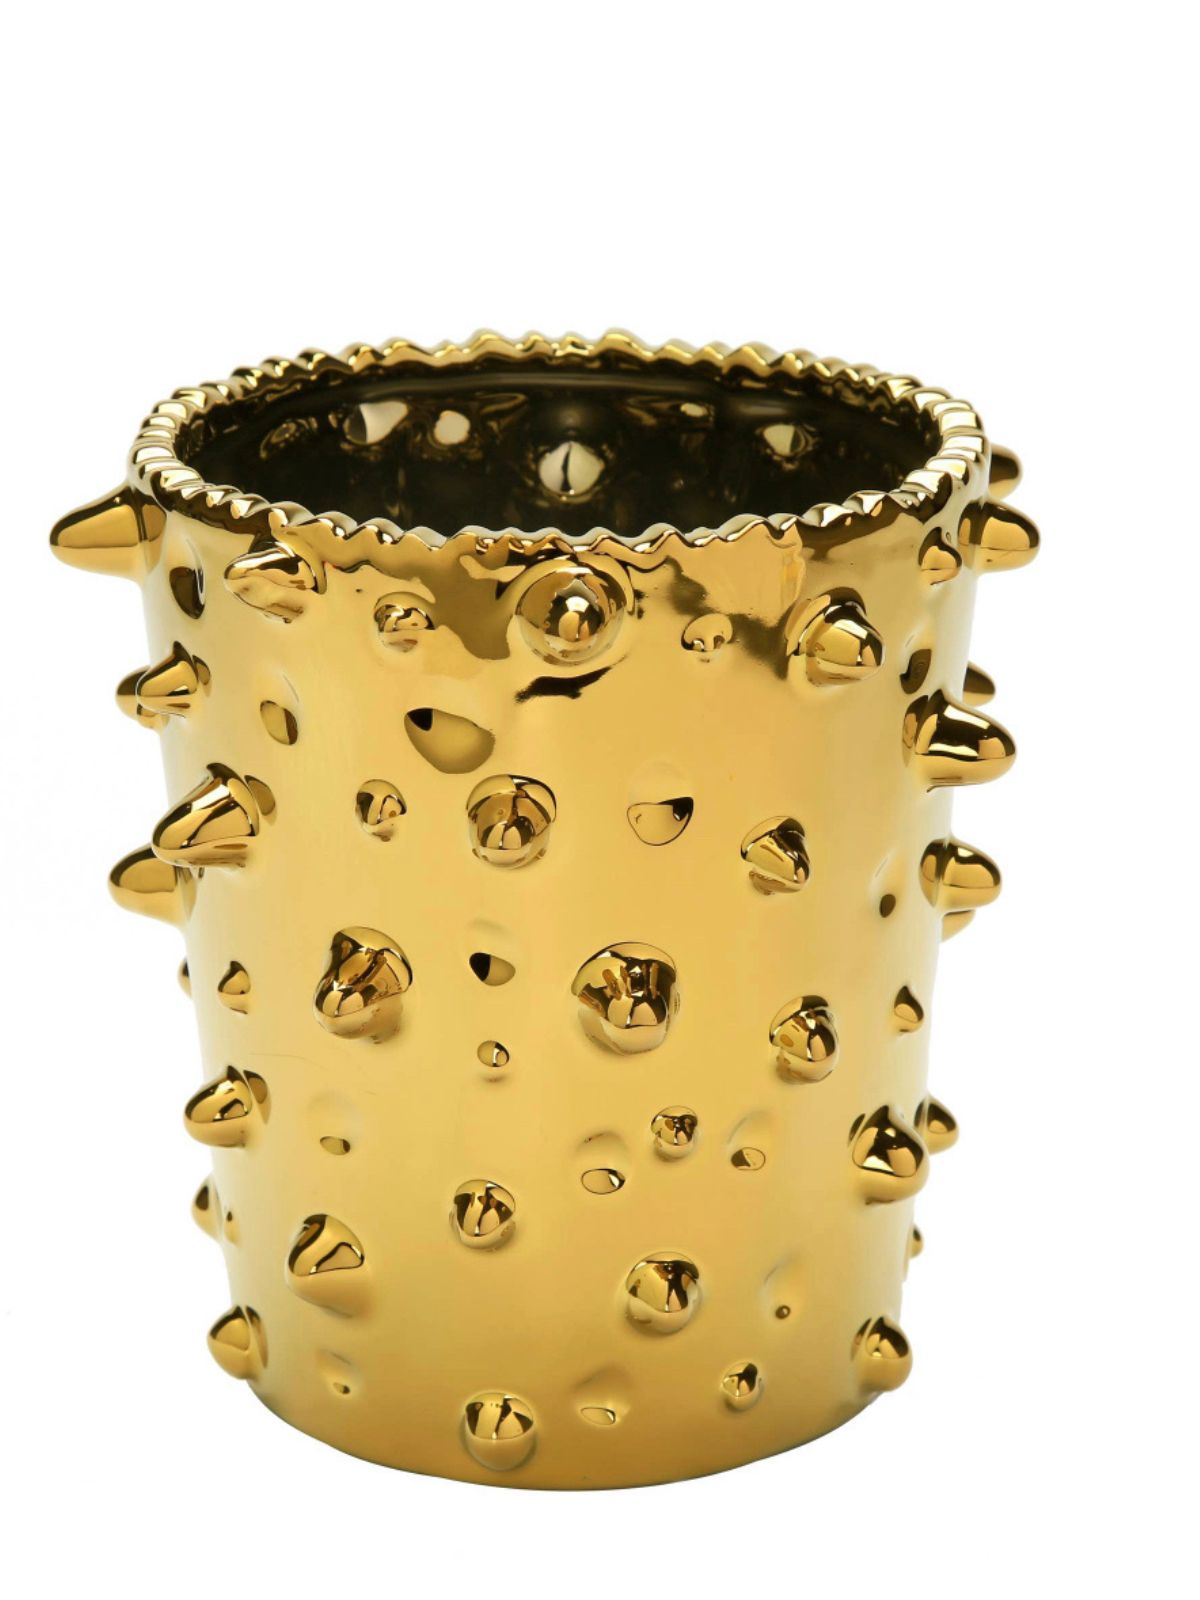 7H Gold Ceramic Decorative Vase with Dimensional Studded Design. Sold at KYA Home Decor.